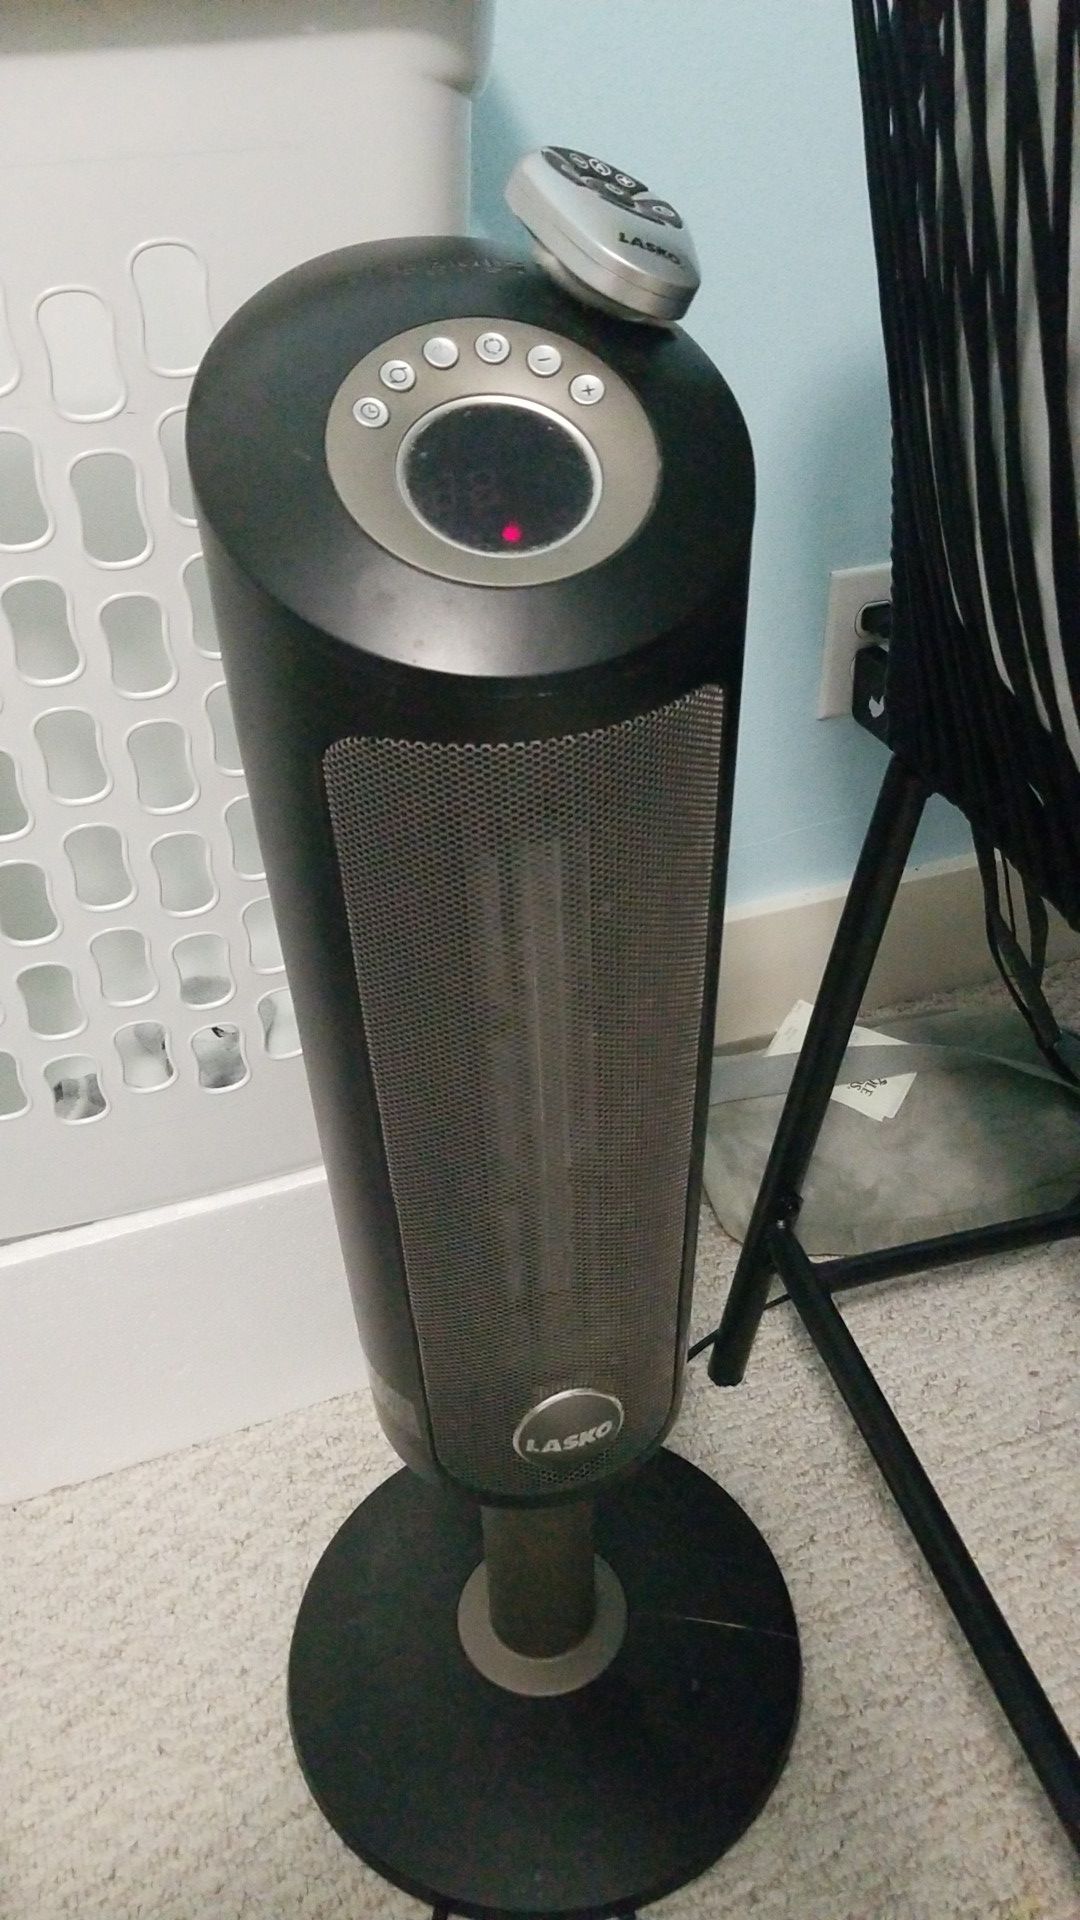 Lasko ceramic heater with remote